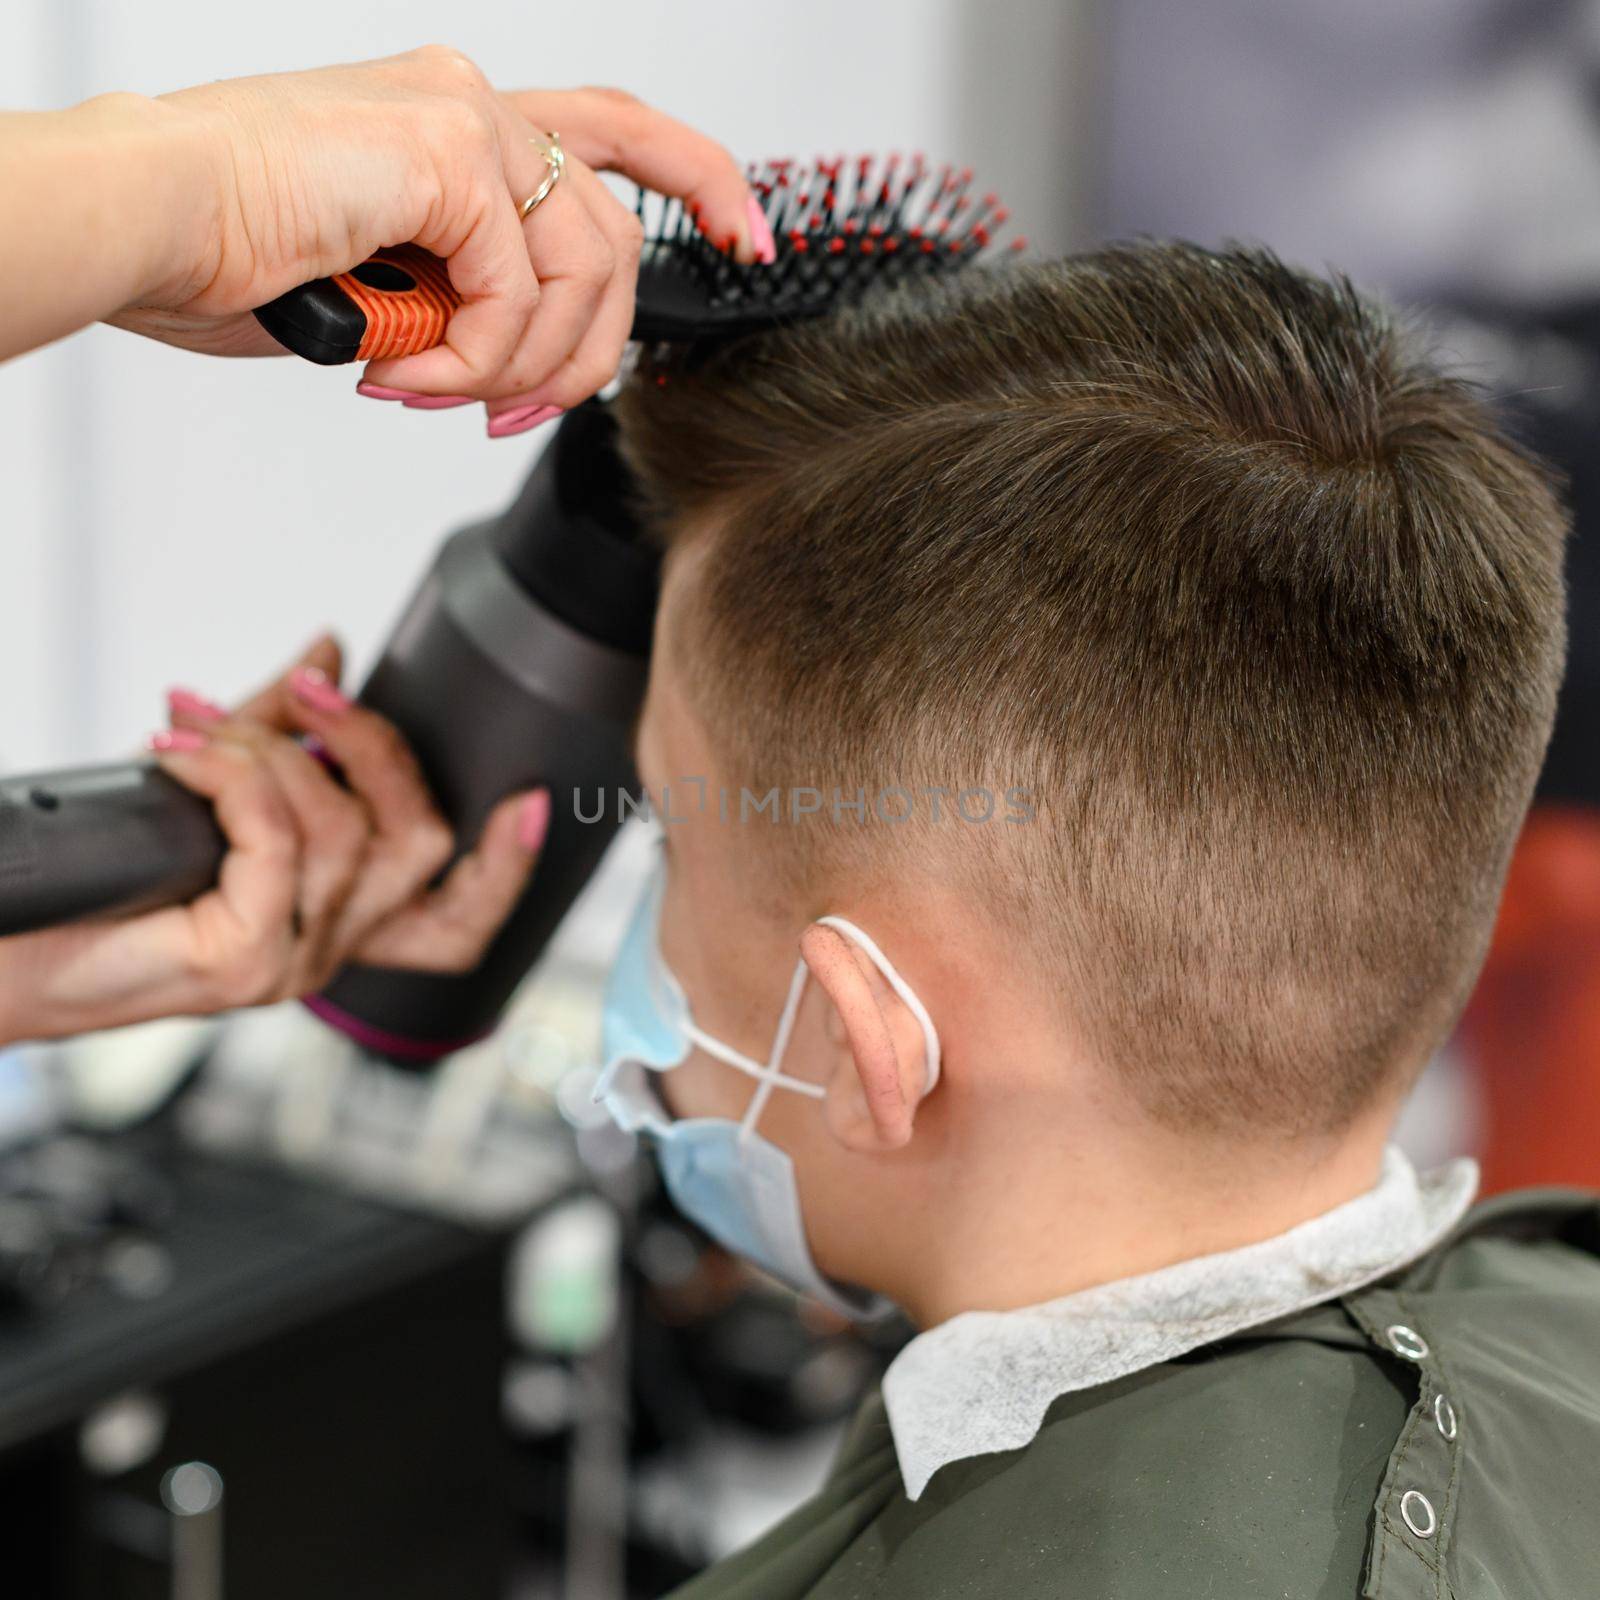 Teen guy gets a haircut during a pandemic at the barbershop, haircut and drying hair after a haircut. by Niko_Cingaryuk